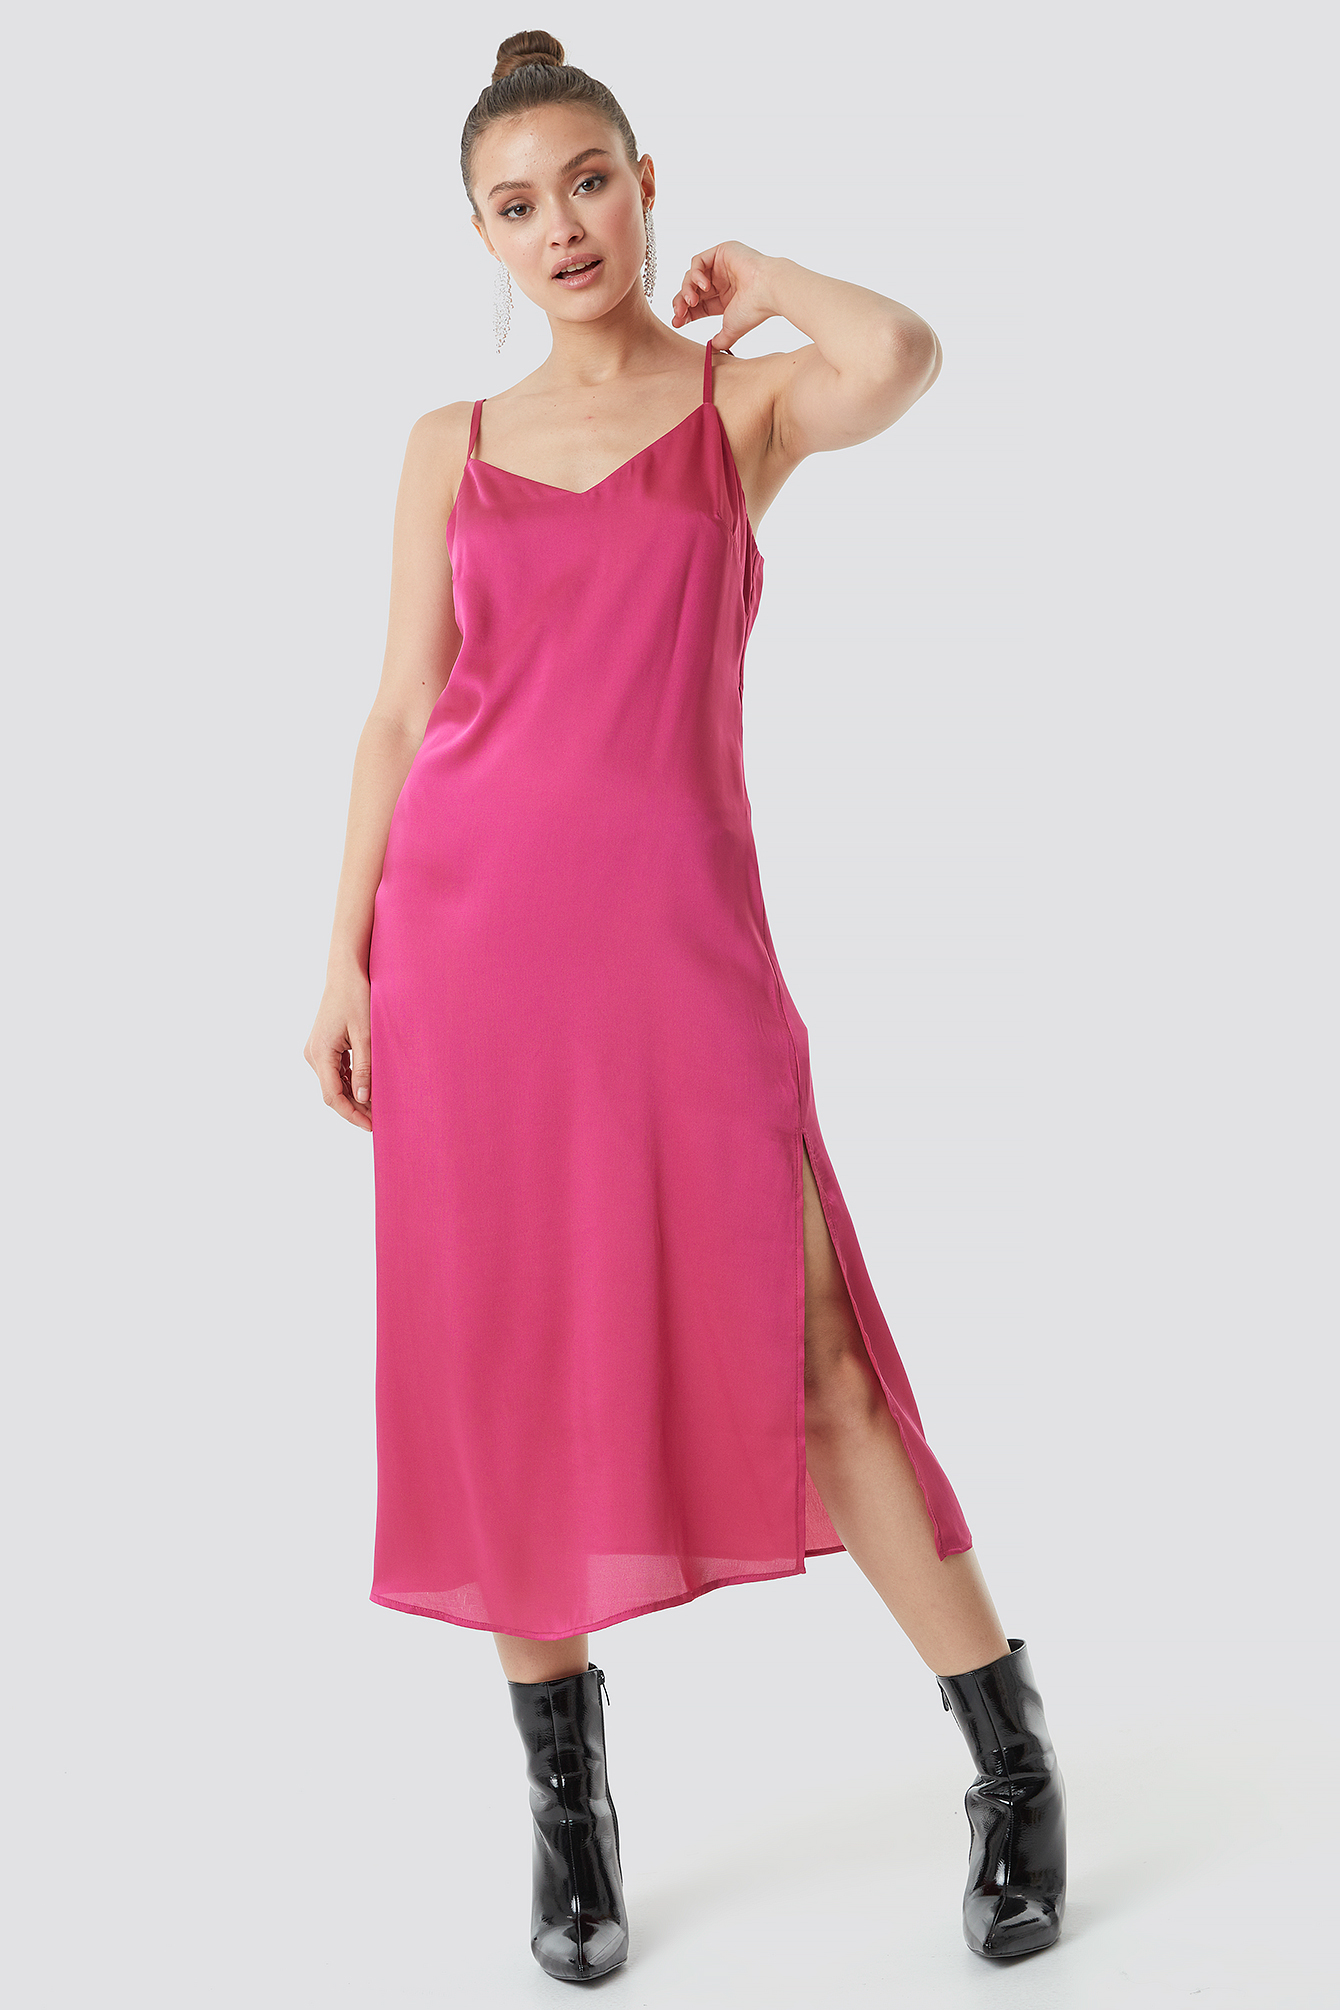 bright pink slip dress